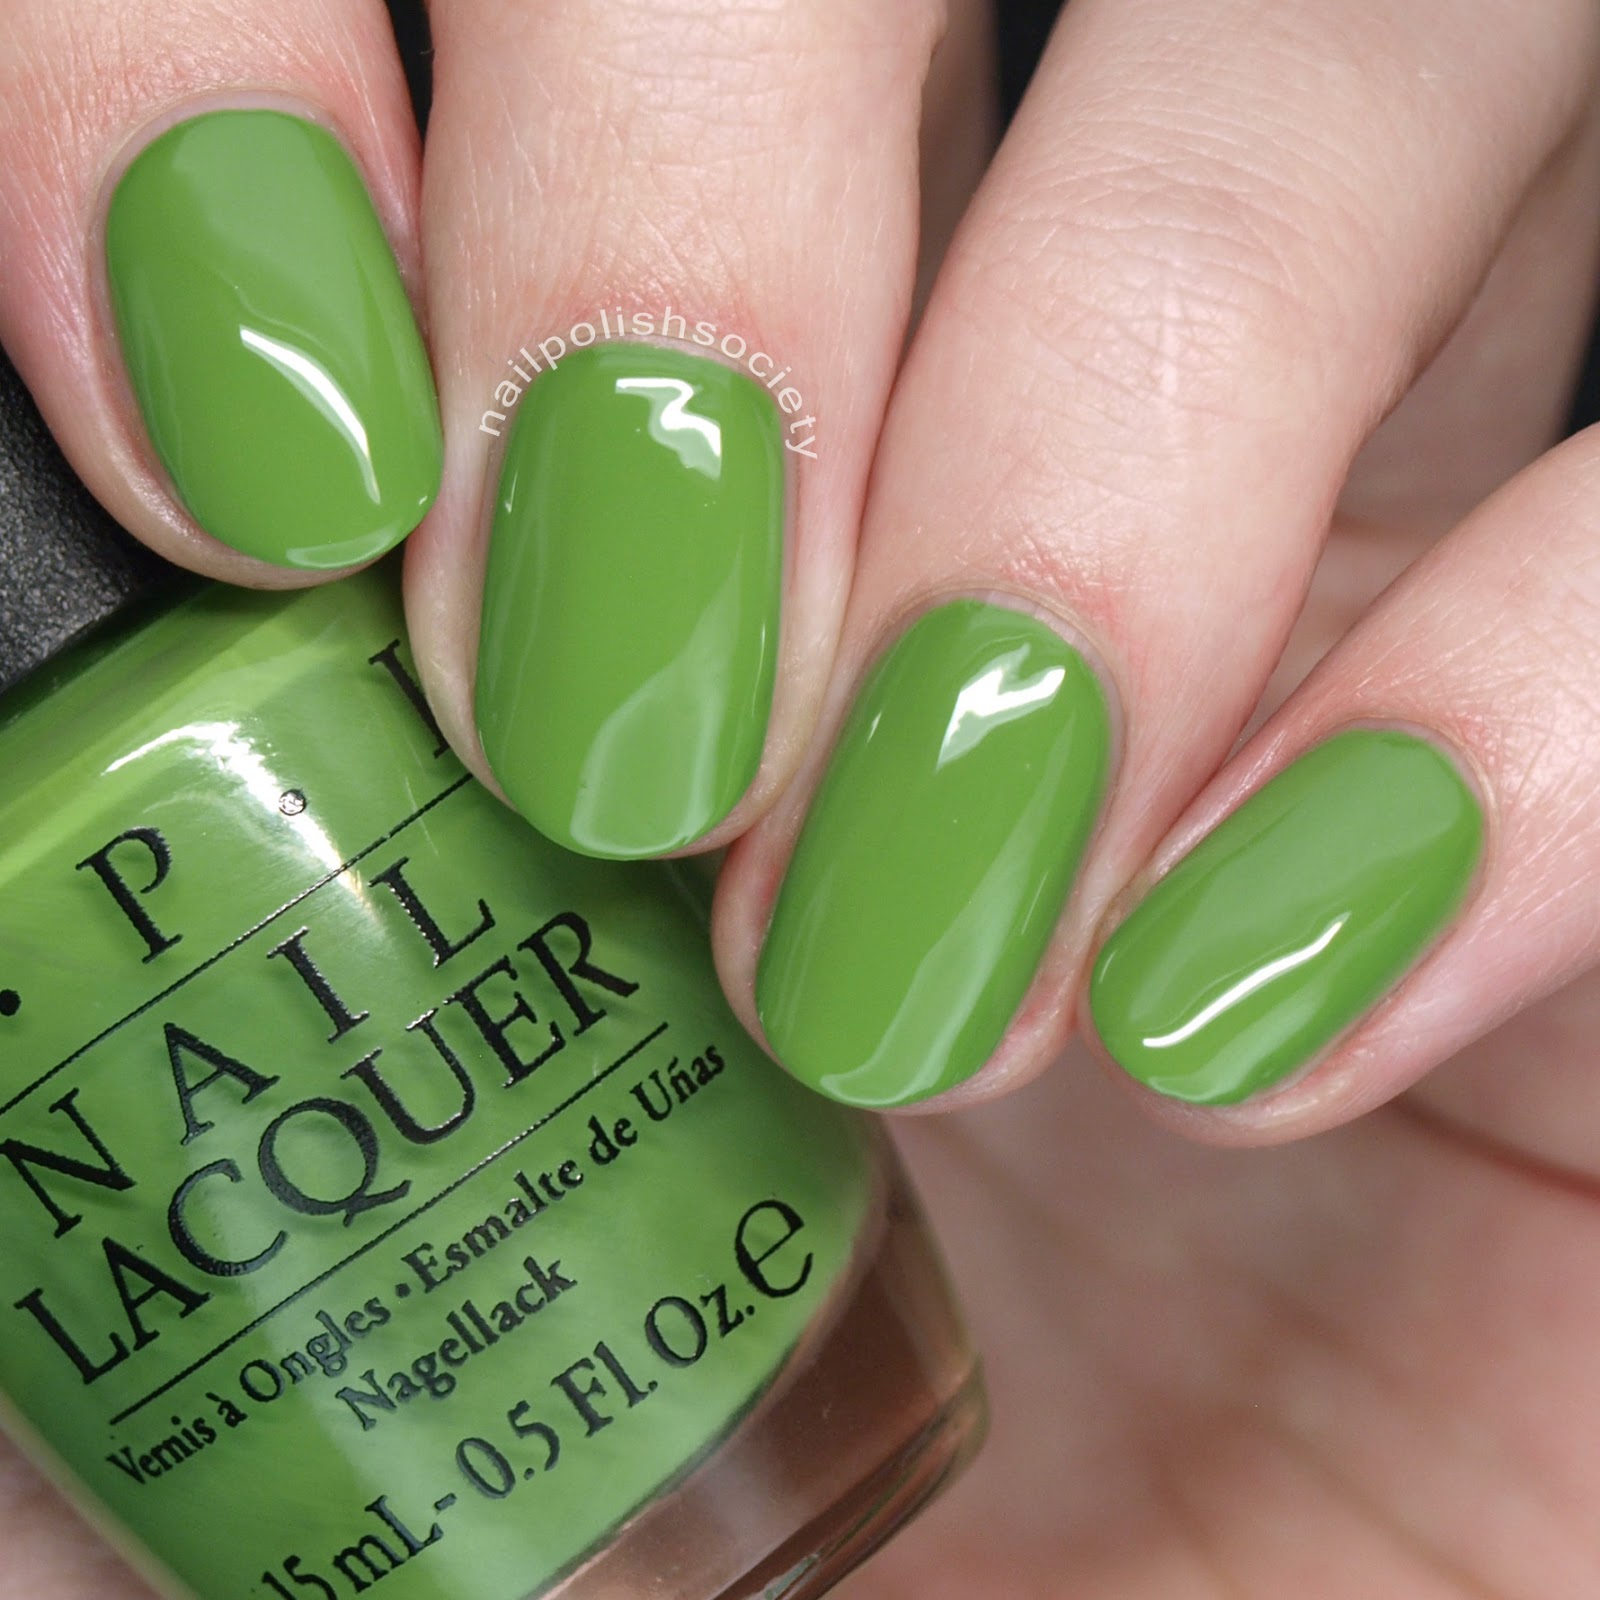 Nail Polish Society: 15 Gorgeous Green Nail Polishes for St. Patrick's Day